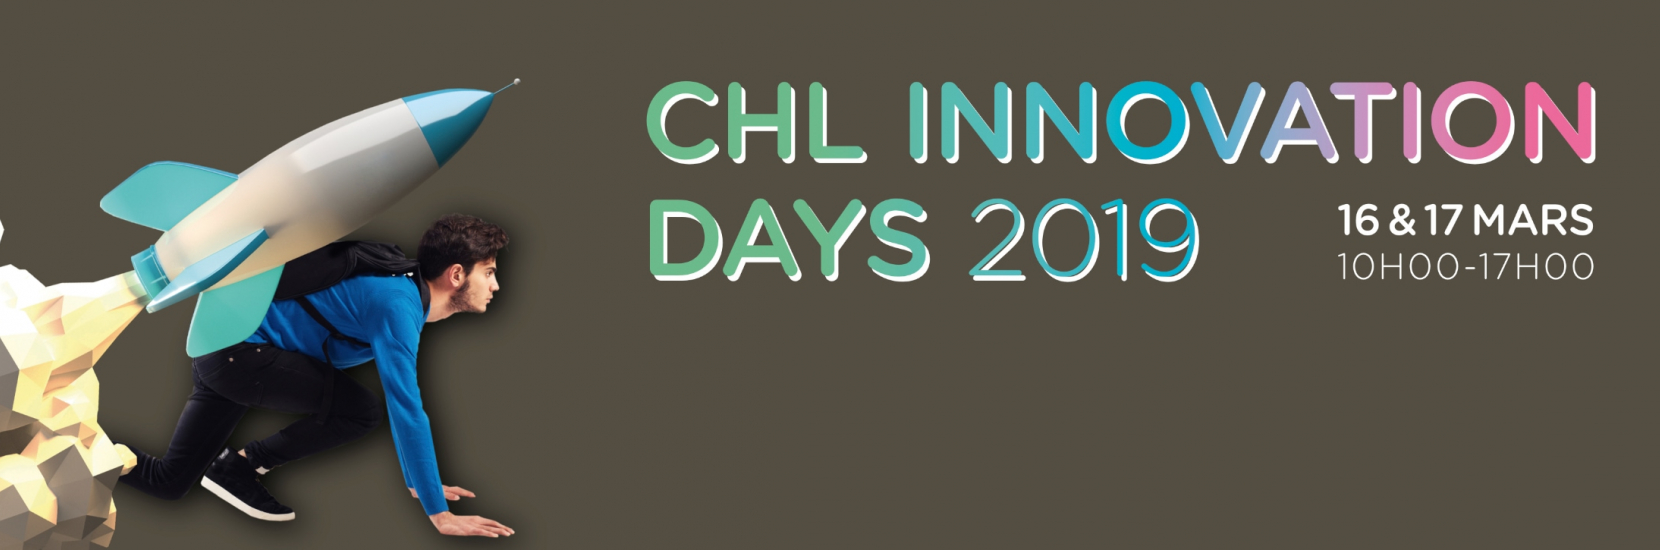 CHL INNOVATION DAYS